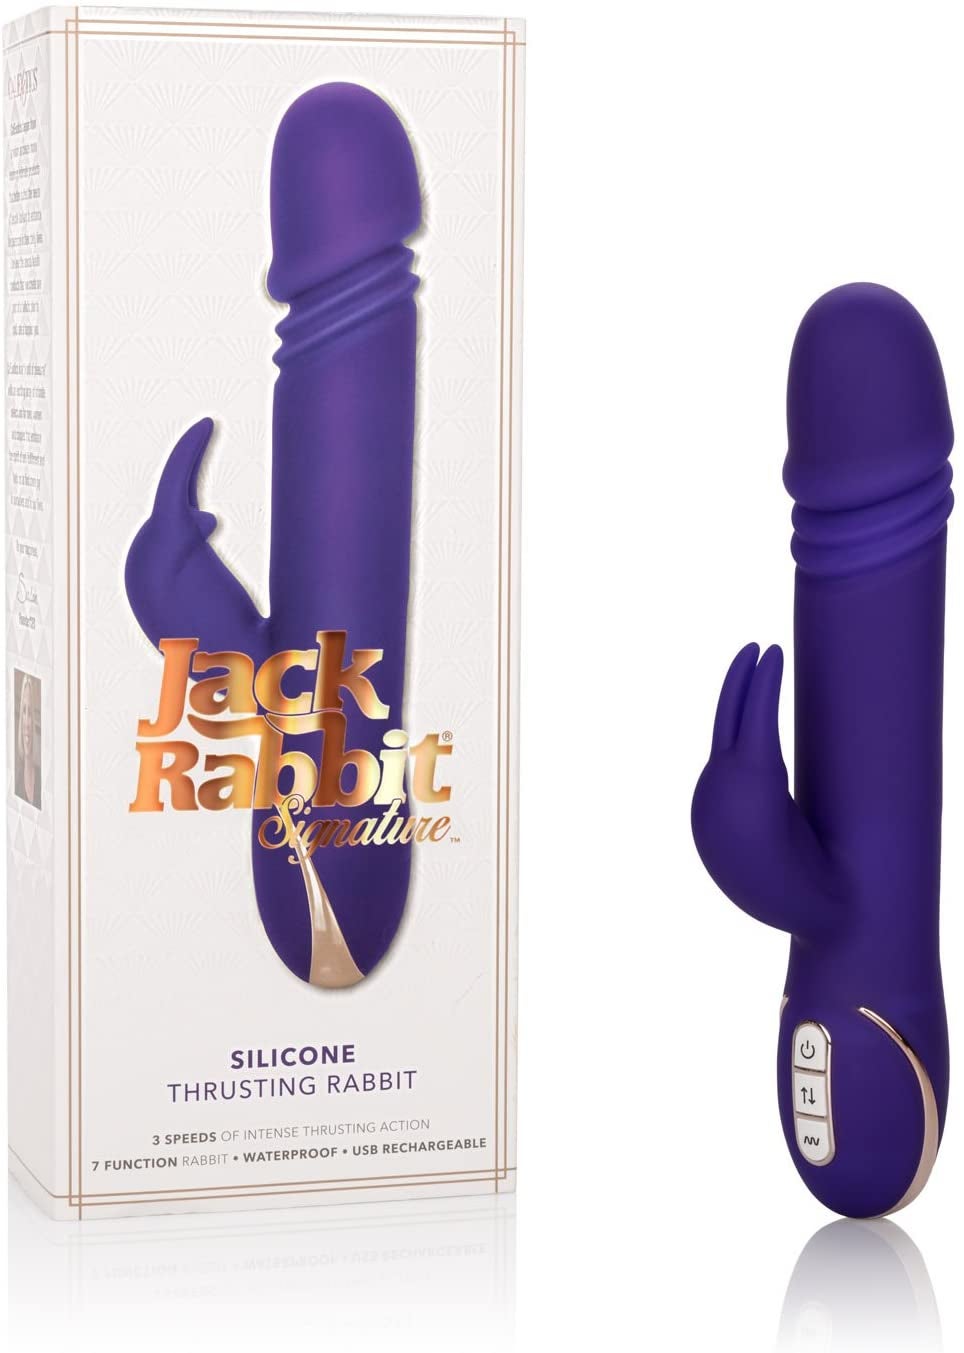 Purple jackrabbit vibrator next to box